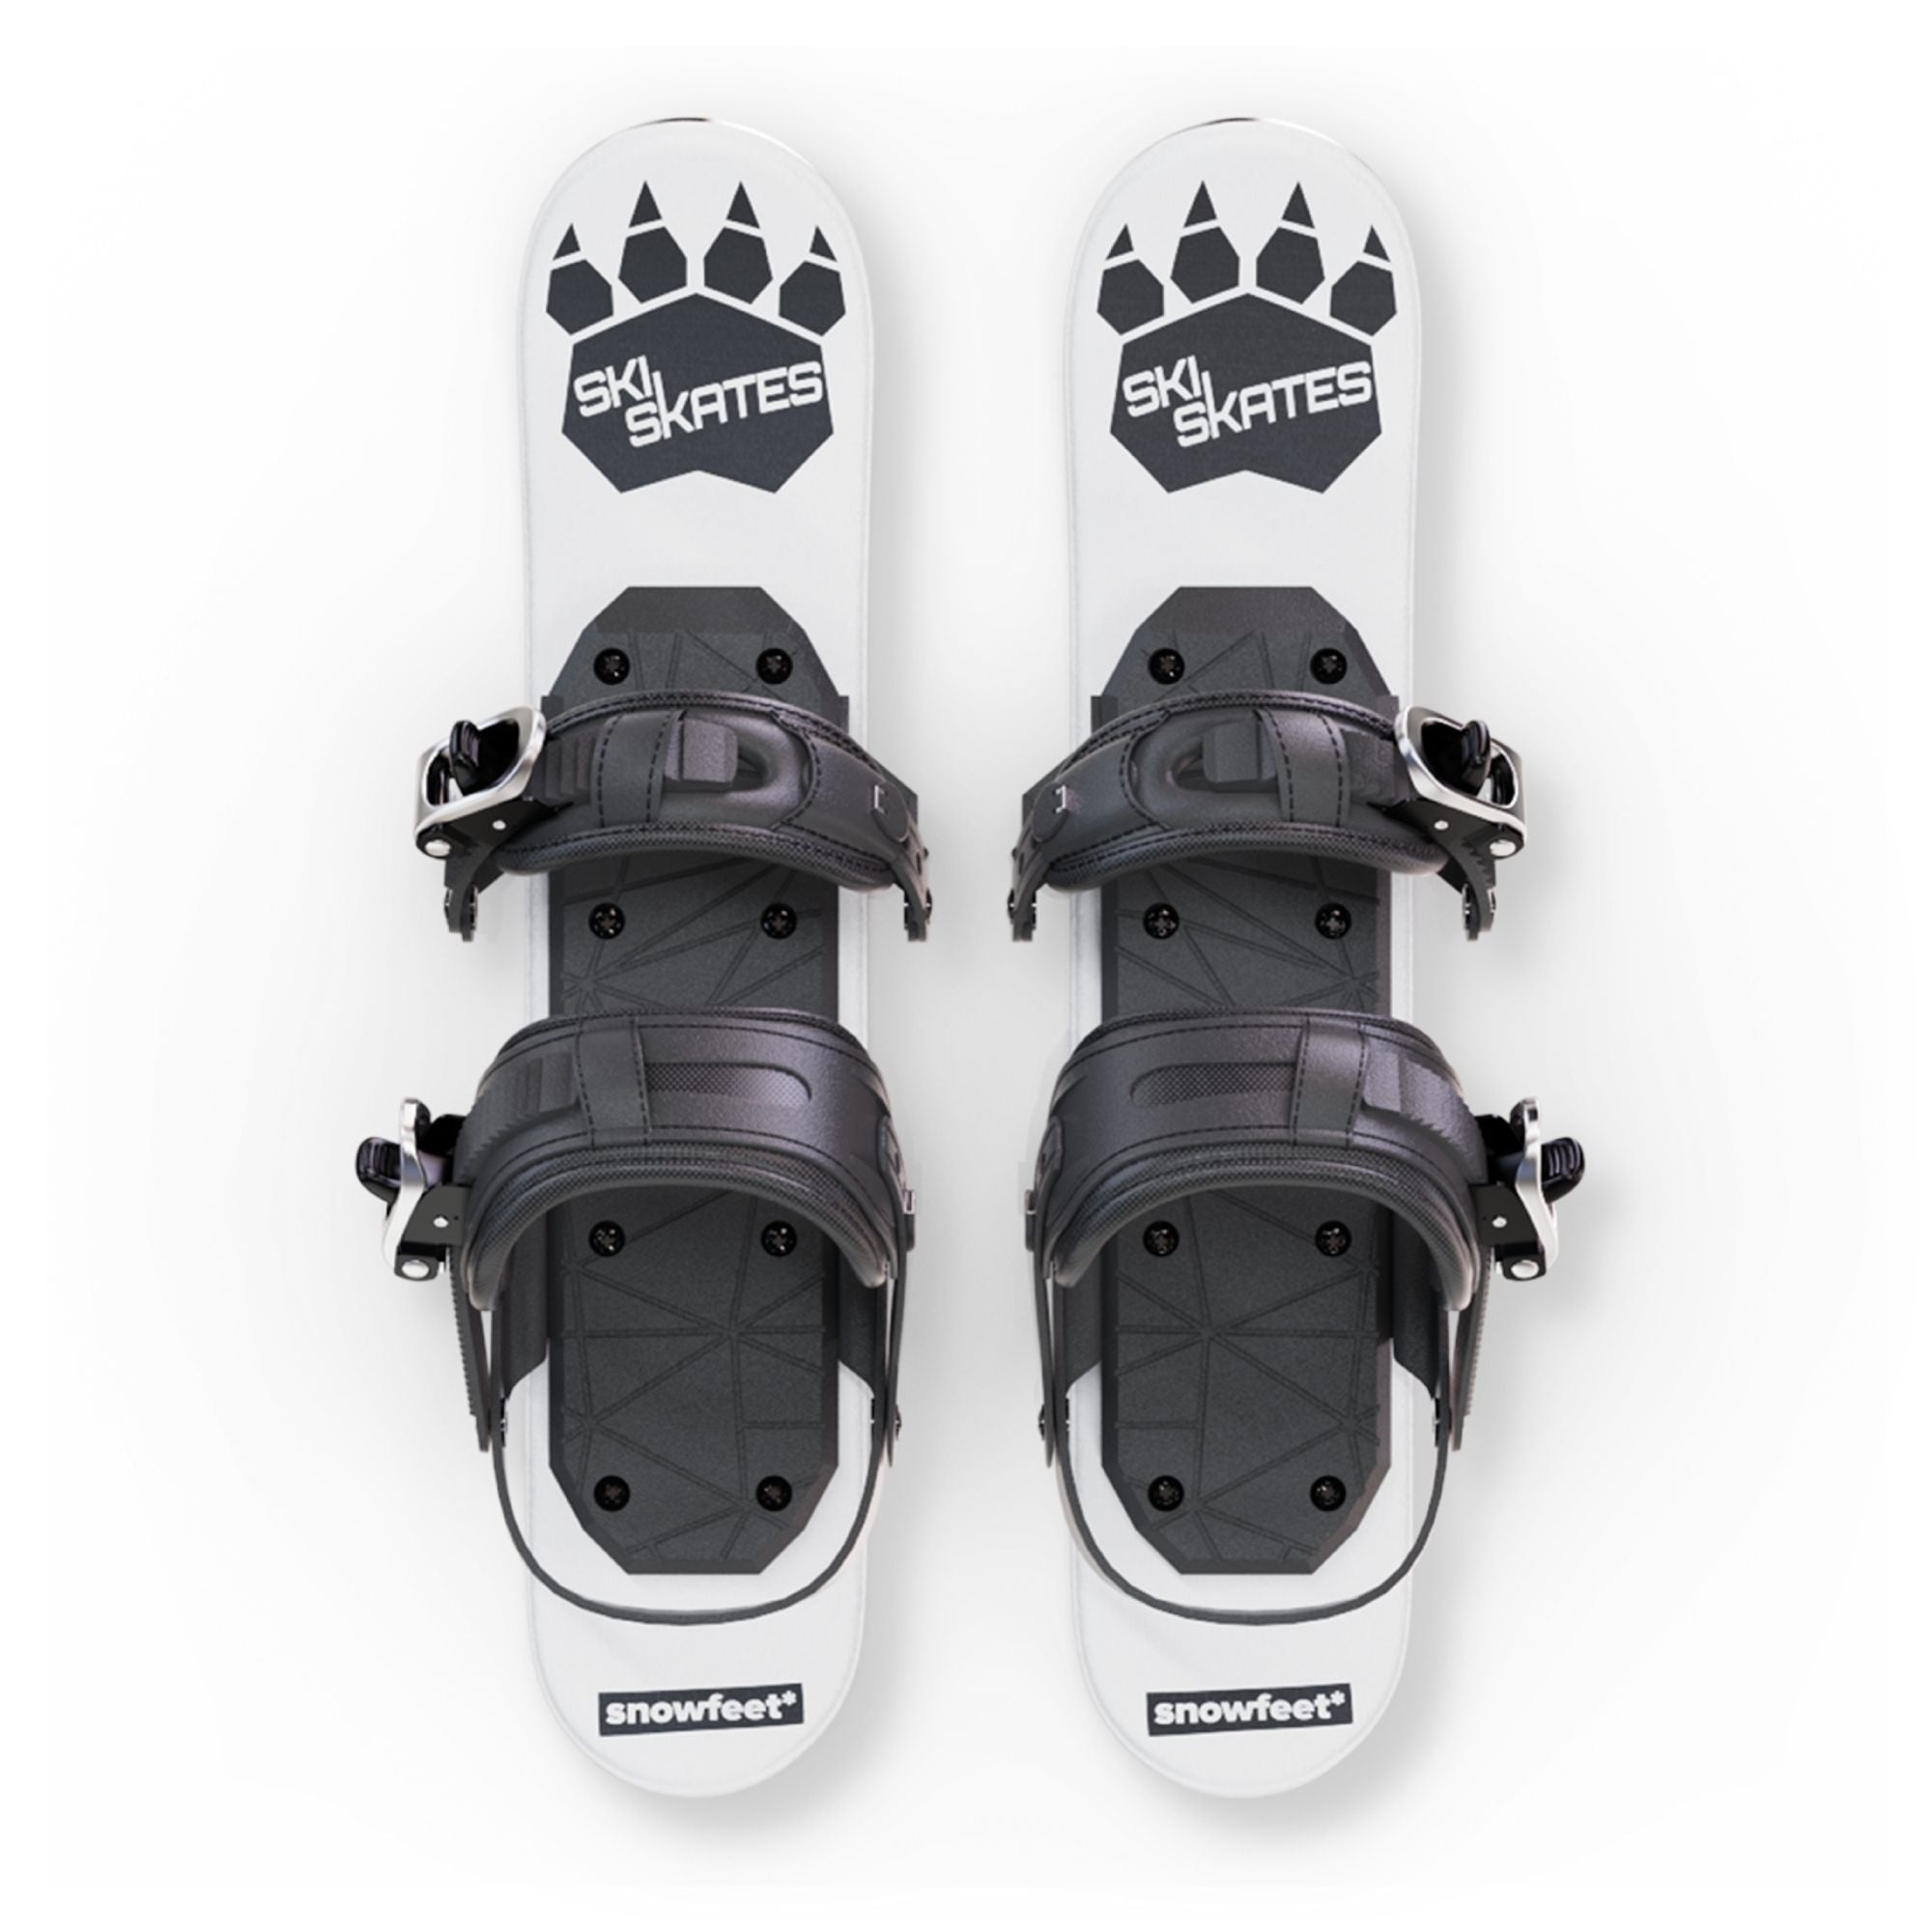 Skiskates | Ski Boots Model | Short Mini Ski by Snowfeet*